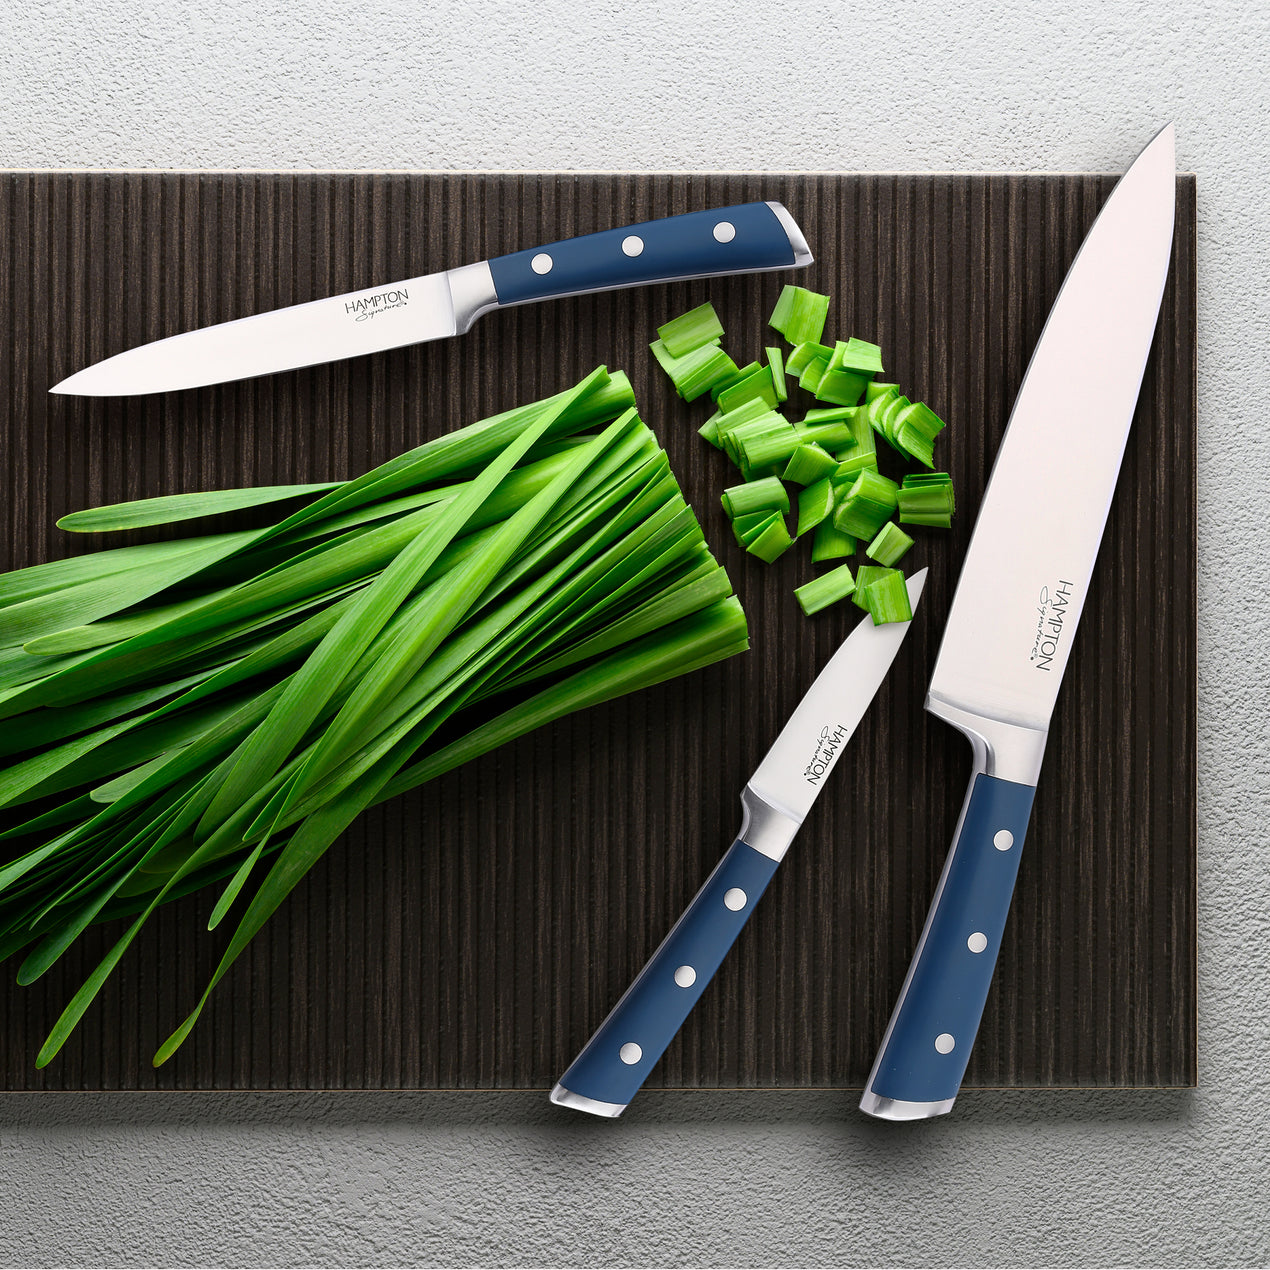 Oneida Quartz One 12-Piece Soft Grip Non-Stick Kitchen Knife Set with Heavy  Duty Wooden Cutting Board 